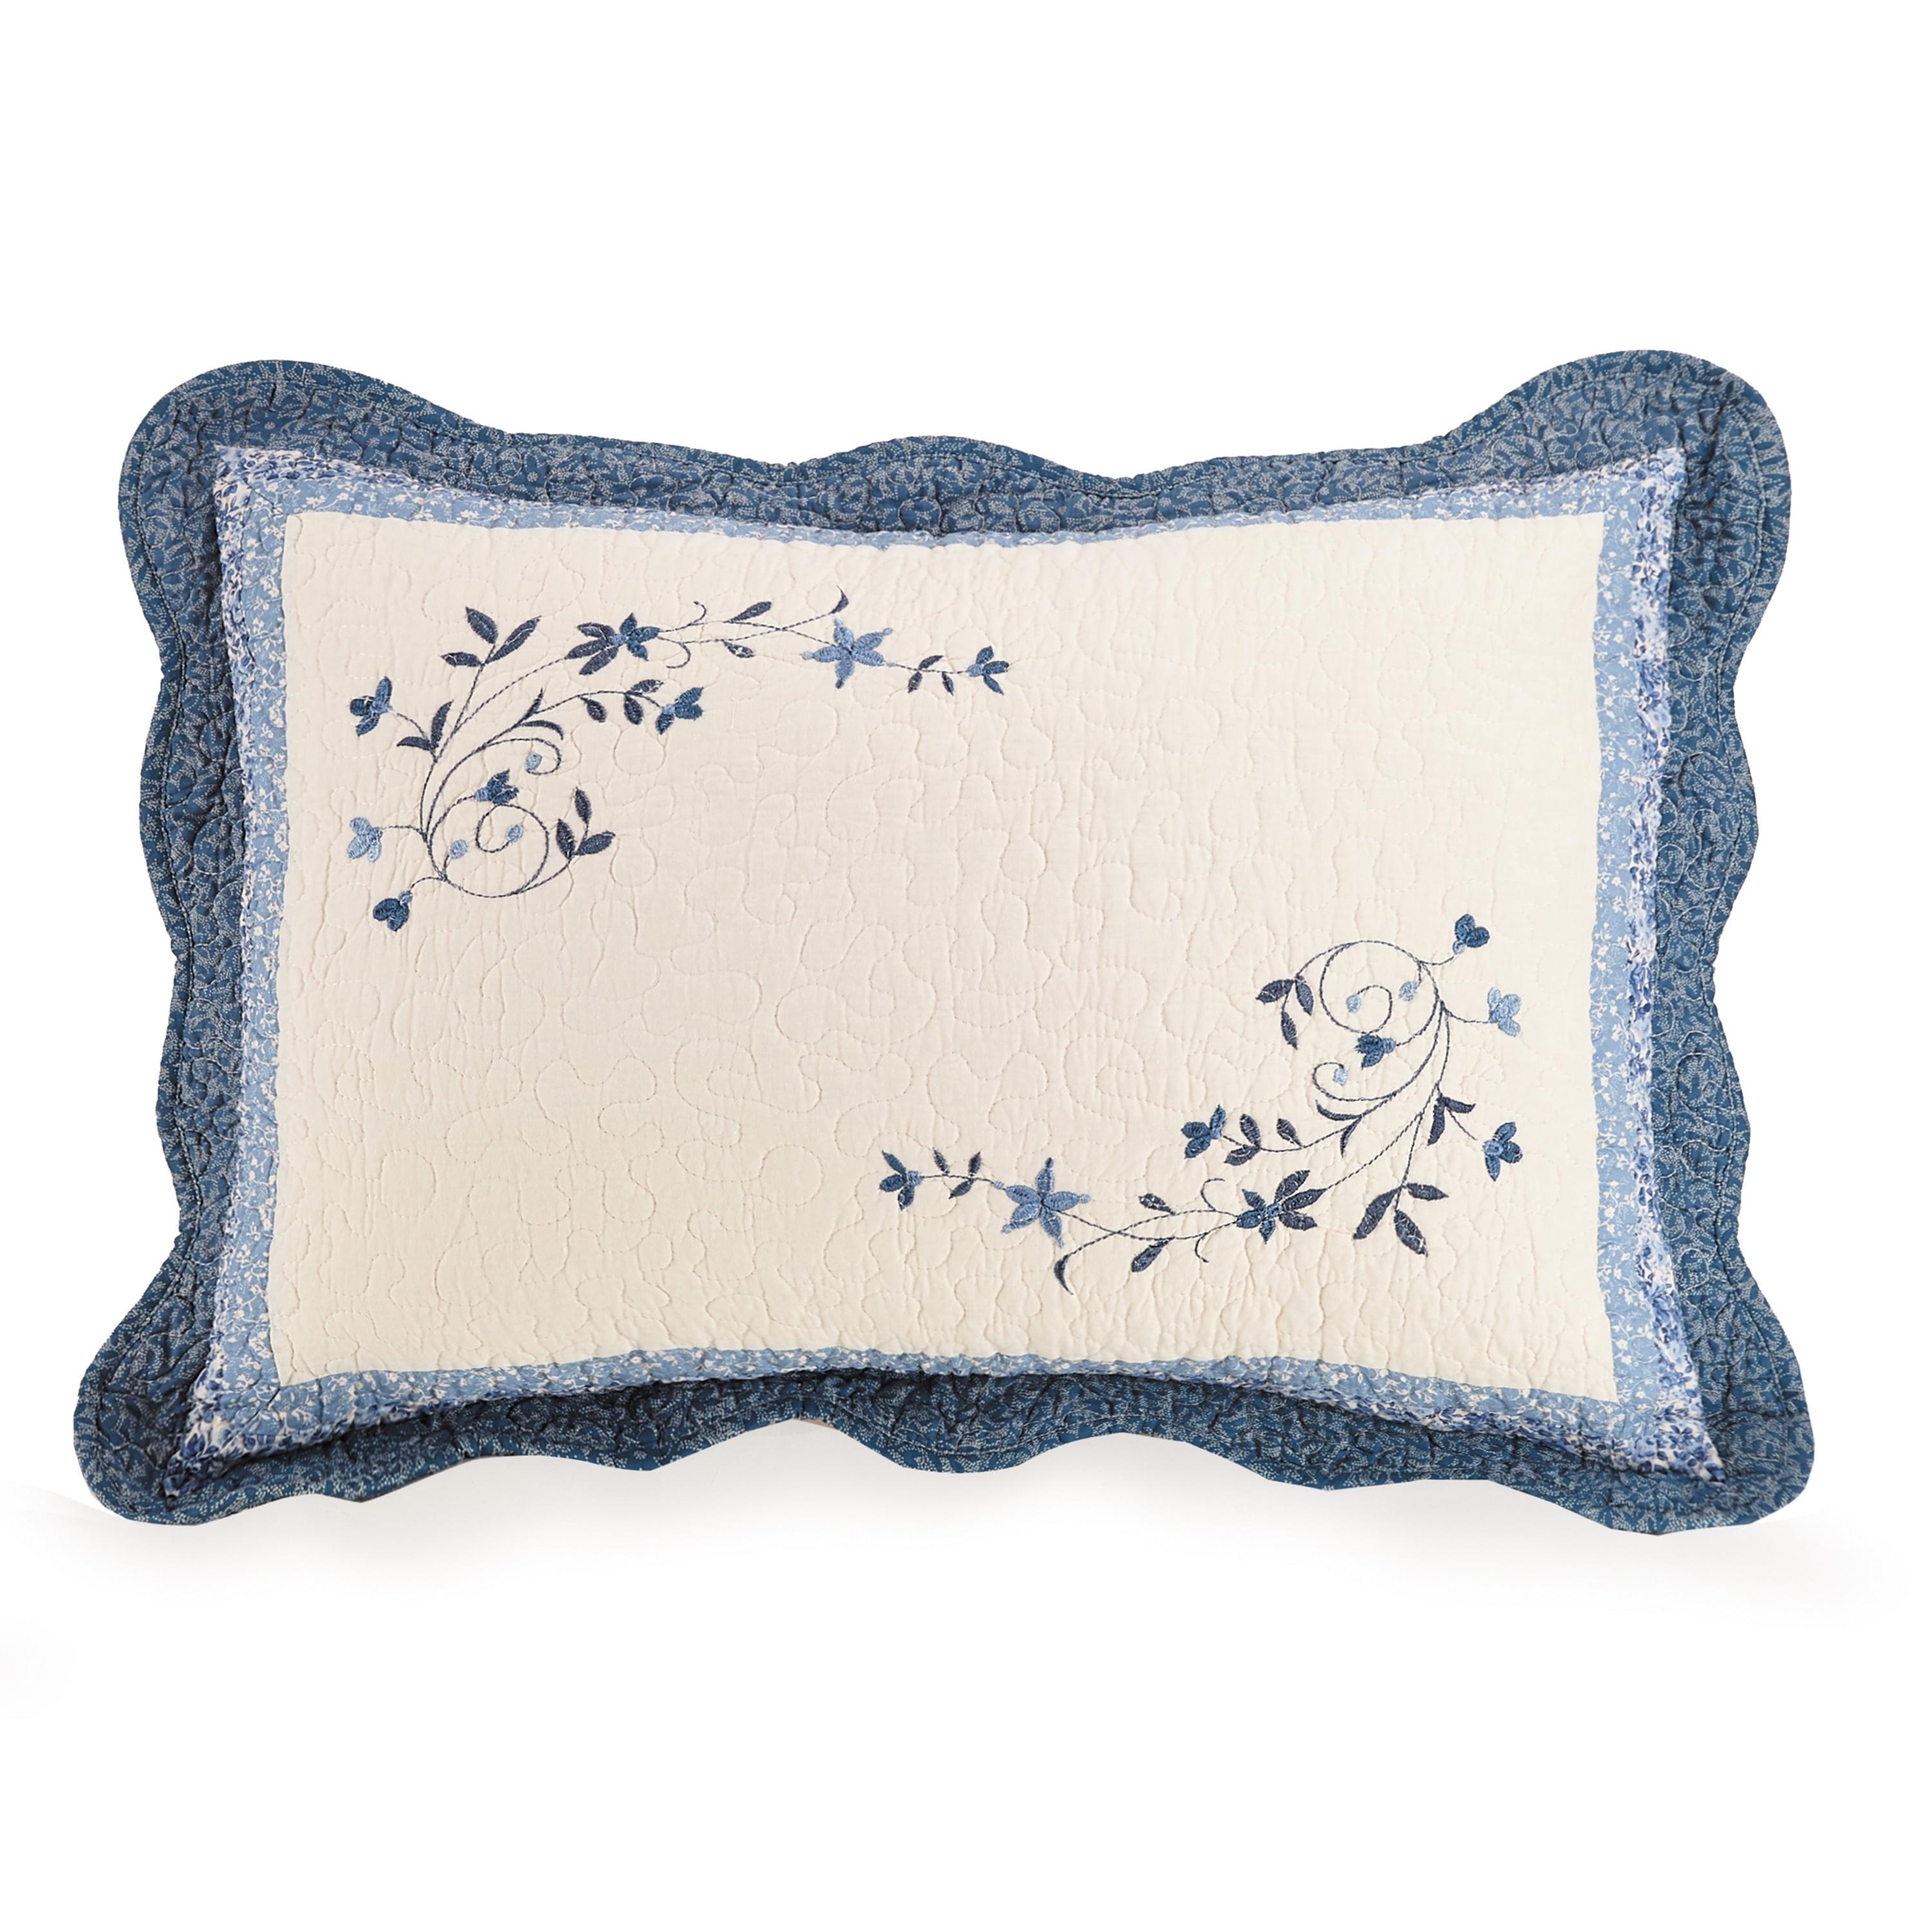 Embroidered Blue Floral Scrolls Cotton-Polyester Standard Sham